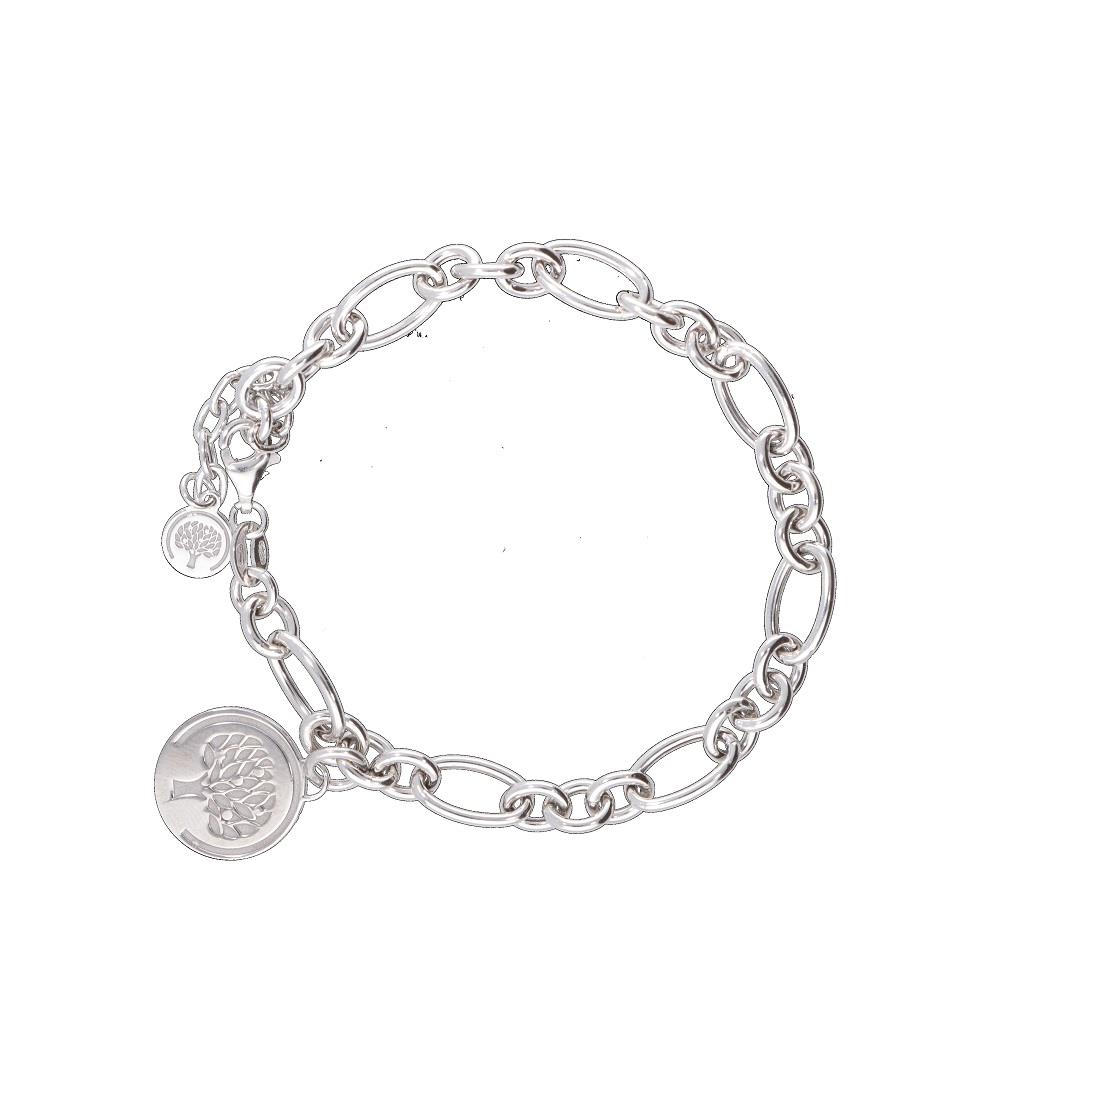 Silver bracelet with Tree of Life charm - ALFIERI & ST. JOHN 925